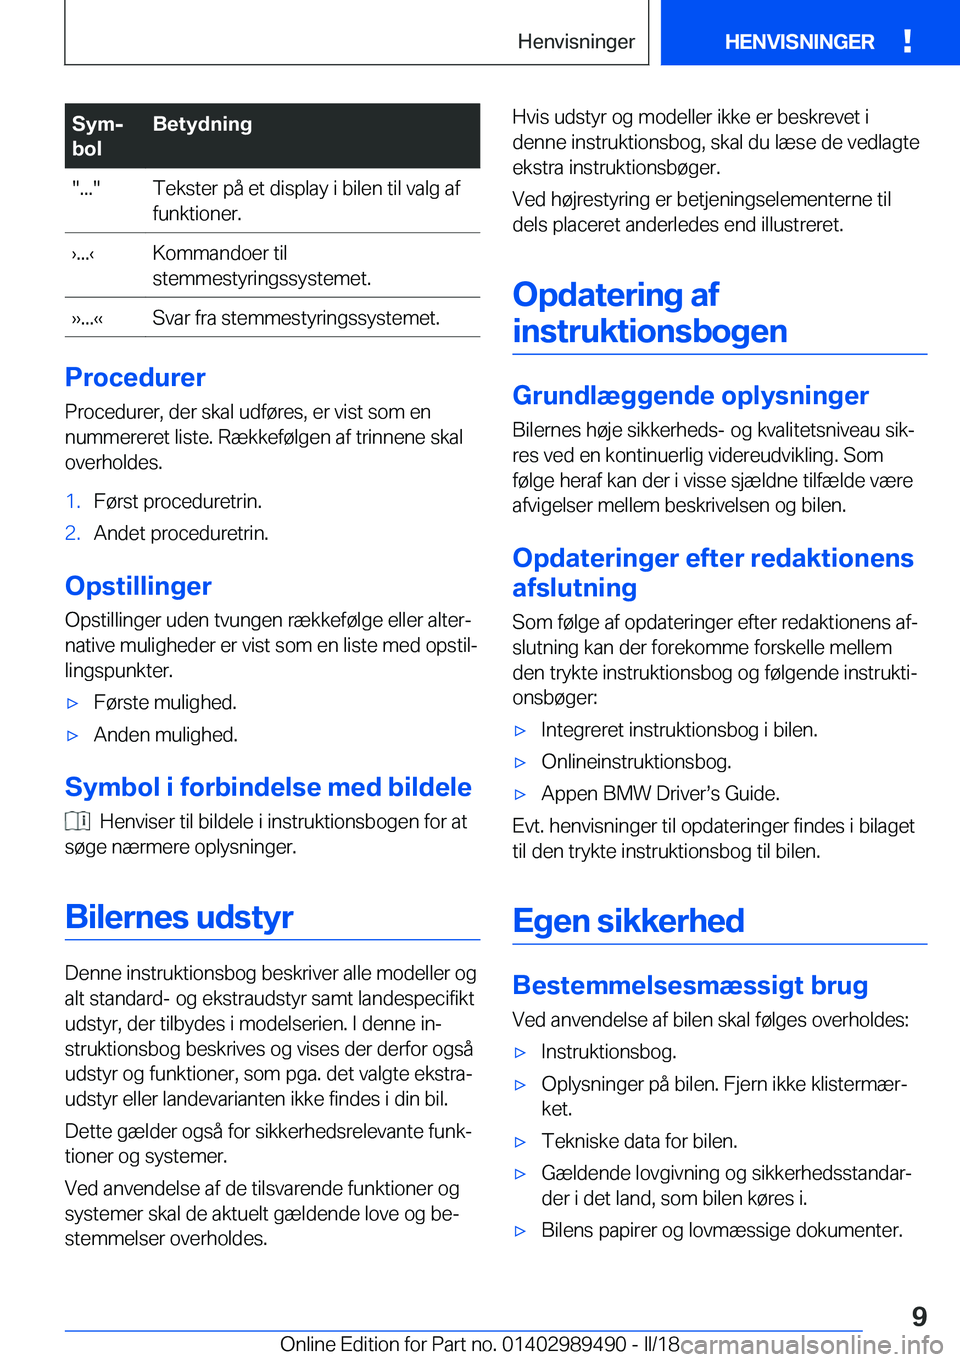 BMW M3 2018  InstruktionsbØger (in Danish) �S�y�mj
�b�o�l�B�e�t�y�d�n�i�n�g�"�.�.�.�"�T�e�k�s�t�e�r� �p�å� �e�t� �d�i�s�p�l�a�y� �i� �b�i�l�e�n� �t�i�l� �v�a�l�g� �a�f
�f�u�n�k�t�i�o�n�e�r�.